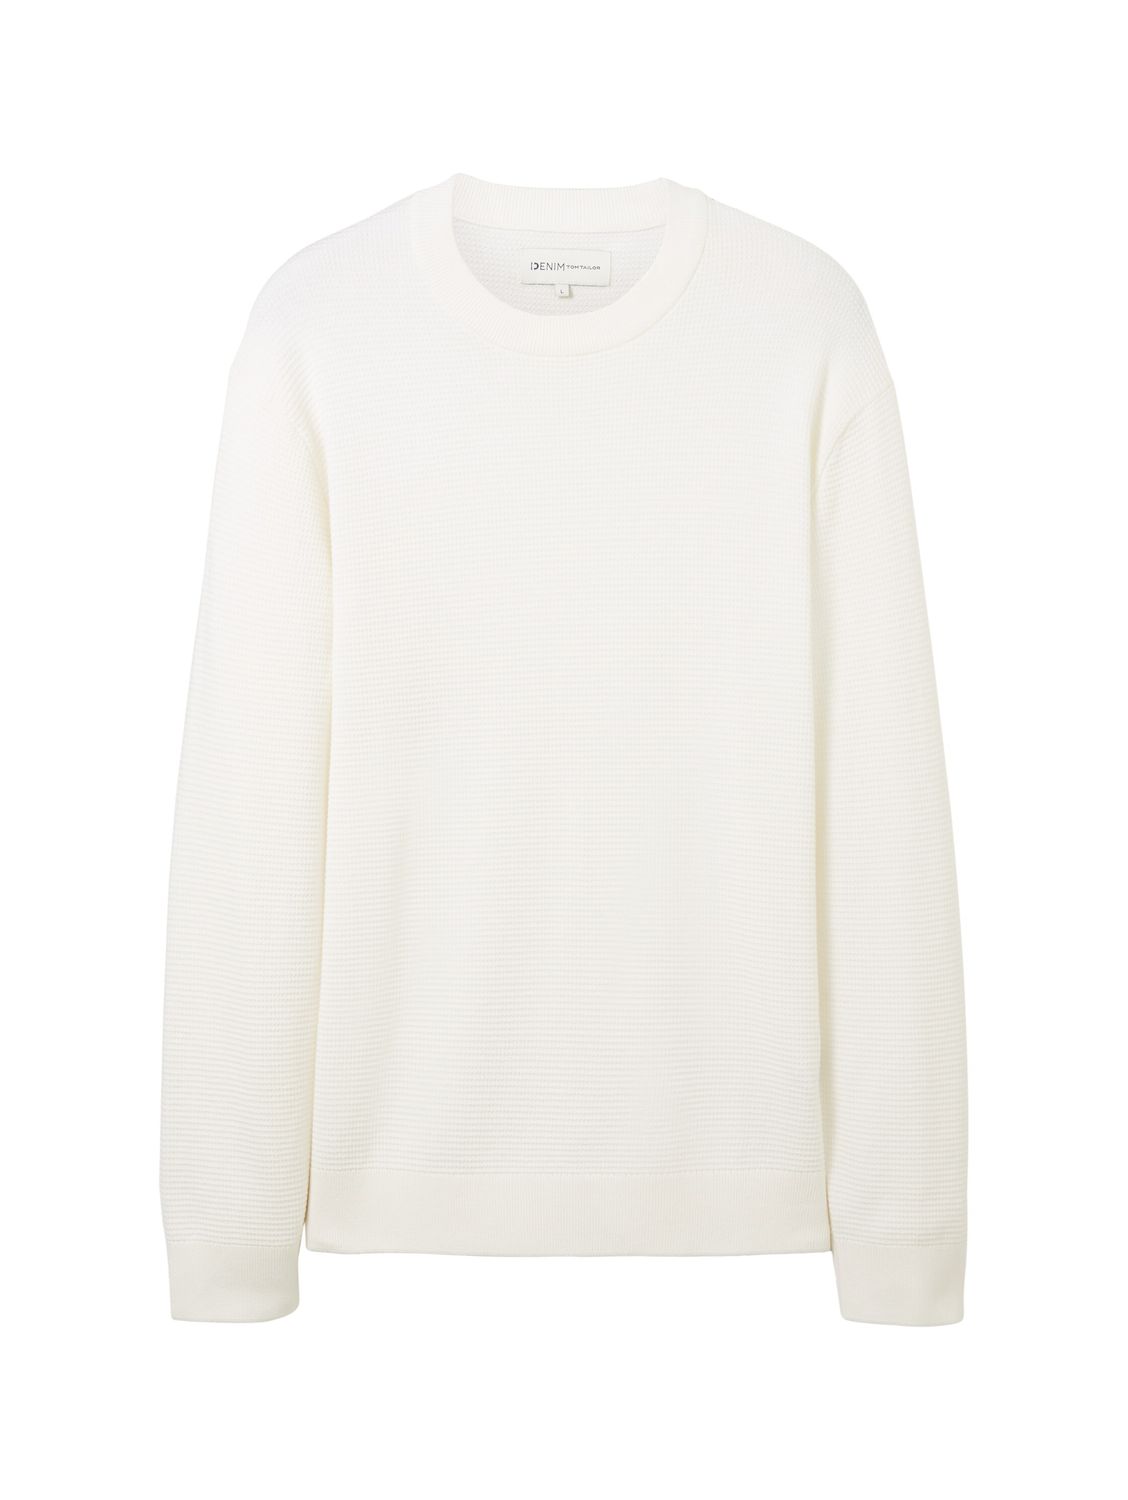 Пуловер TOM TAILOR Denim STRUCTURED BASIC, белый пуловер tom tailor denim structured doublelayer серый